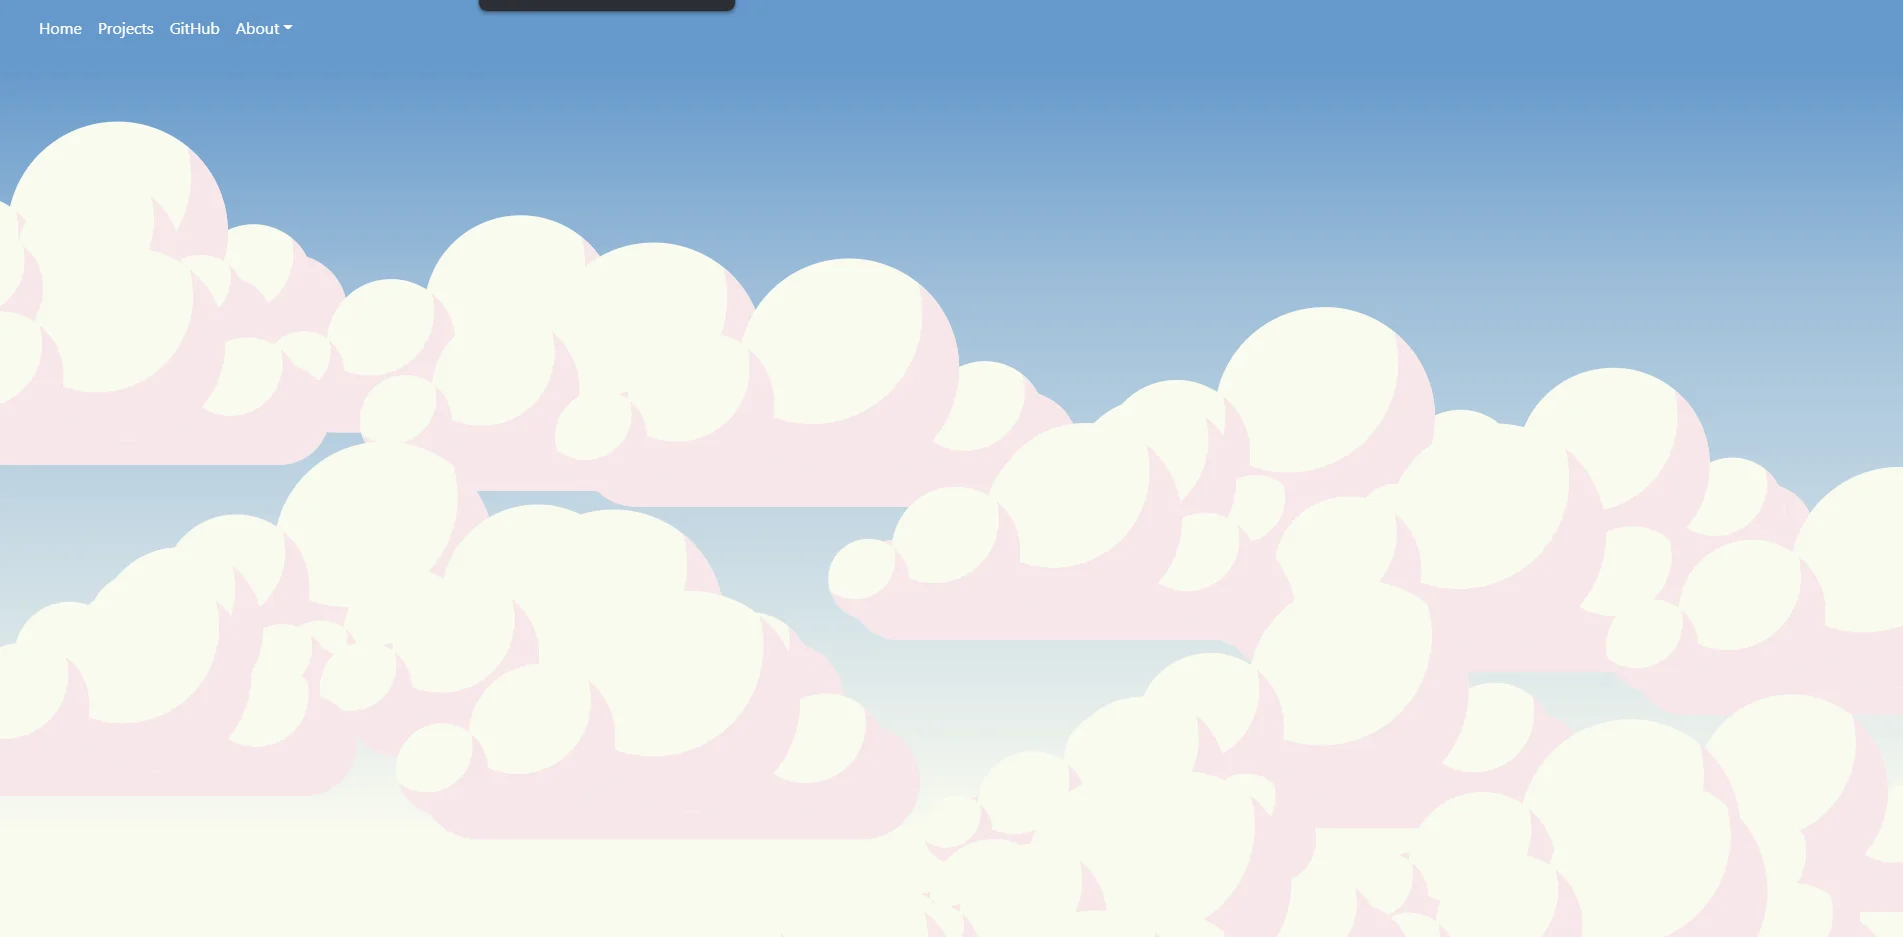 The cloud background of jordantwells.com